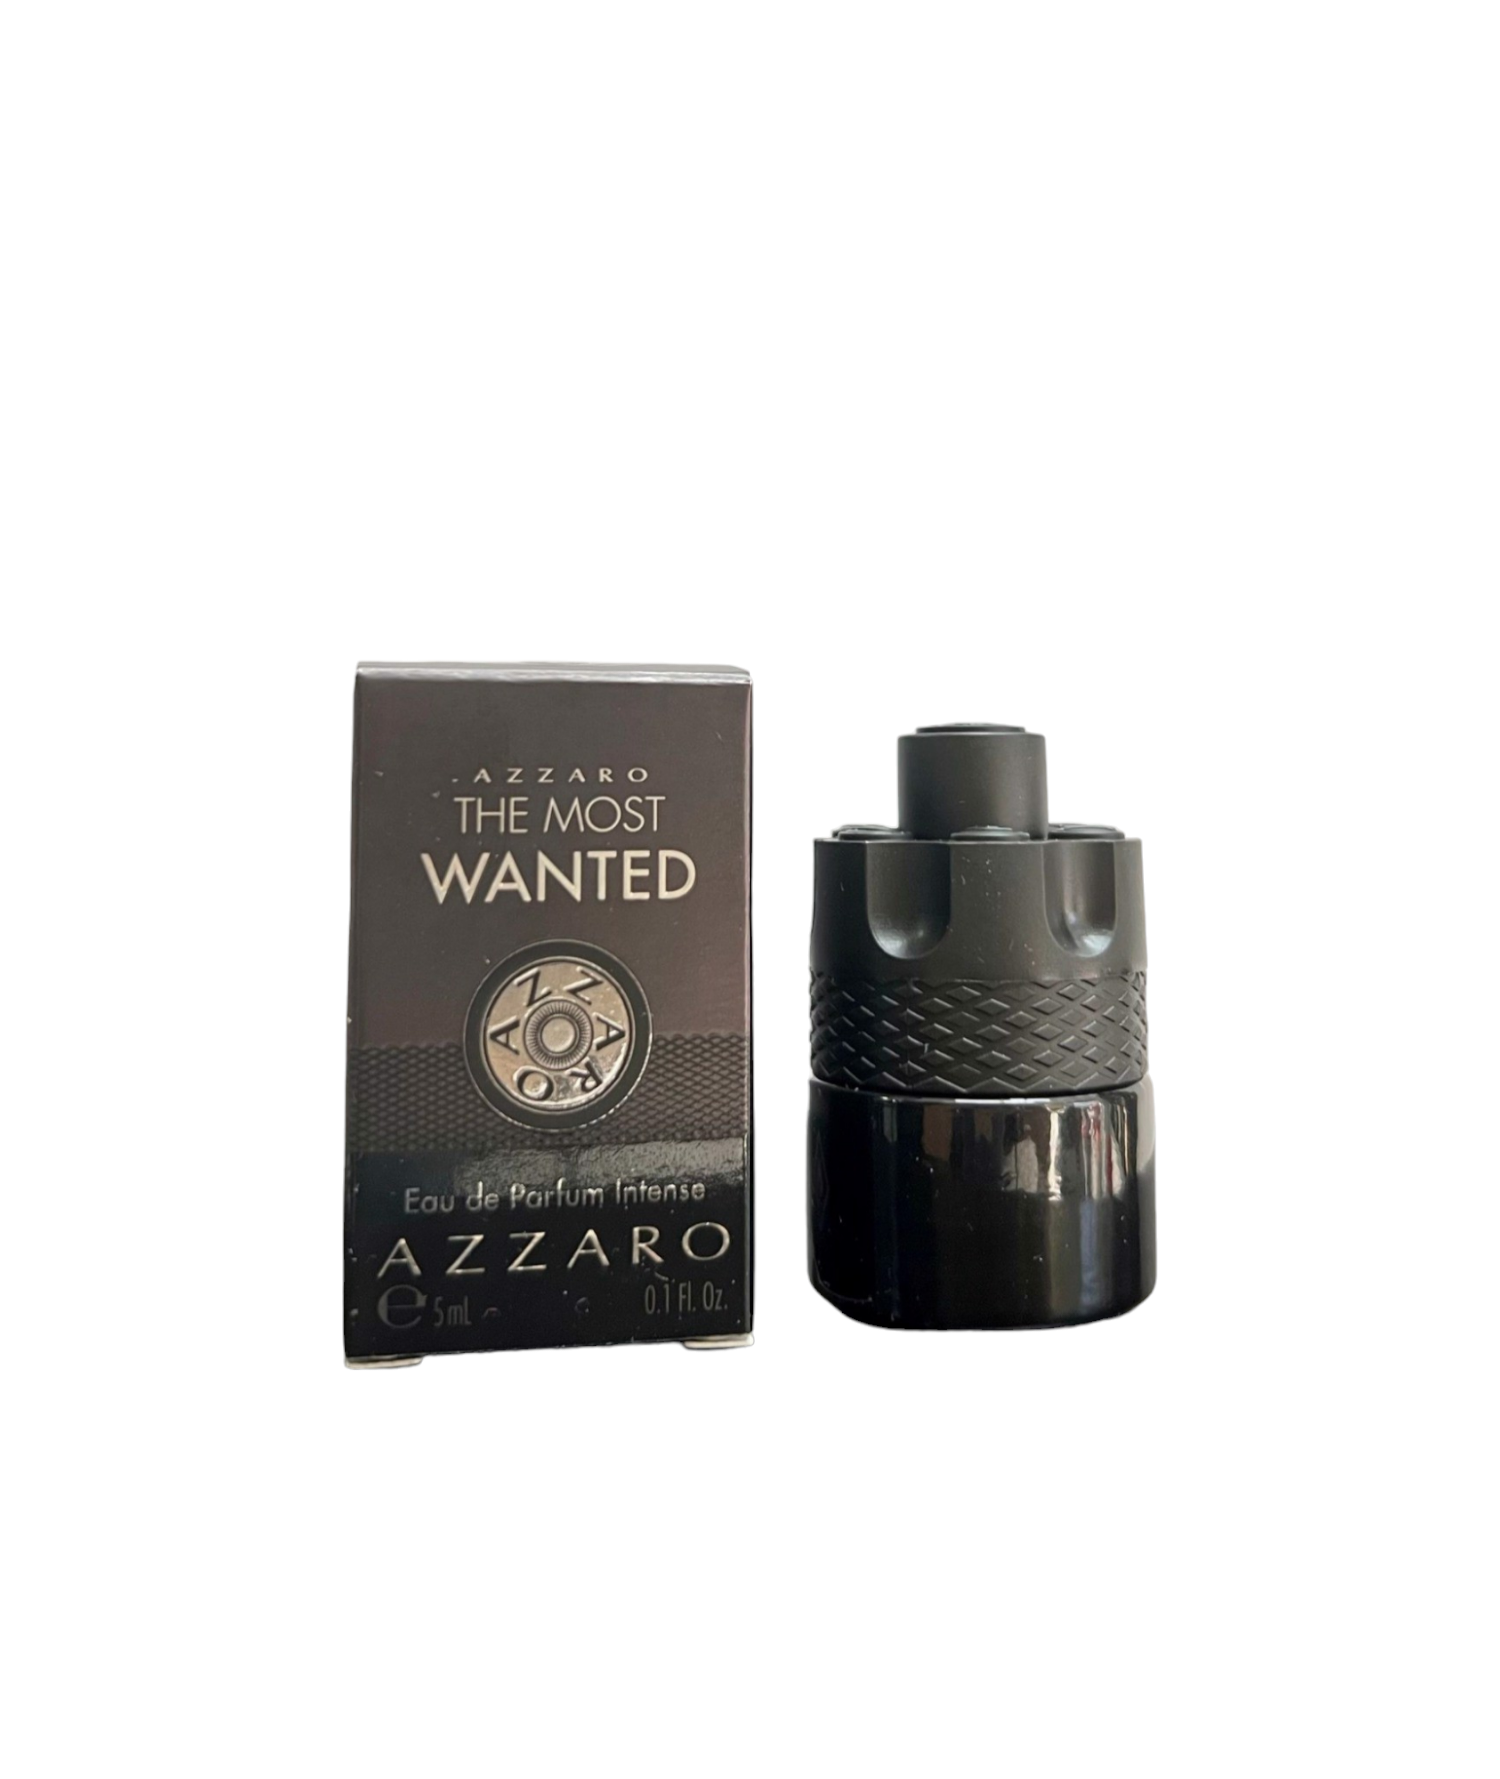 Azzaro The Most Wanted For Men EDP Intense MINI 5ml